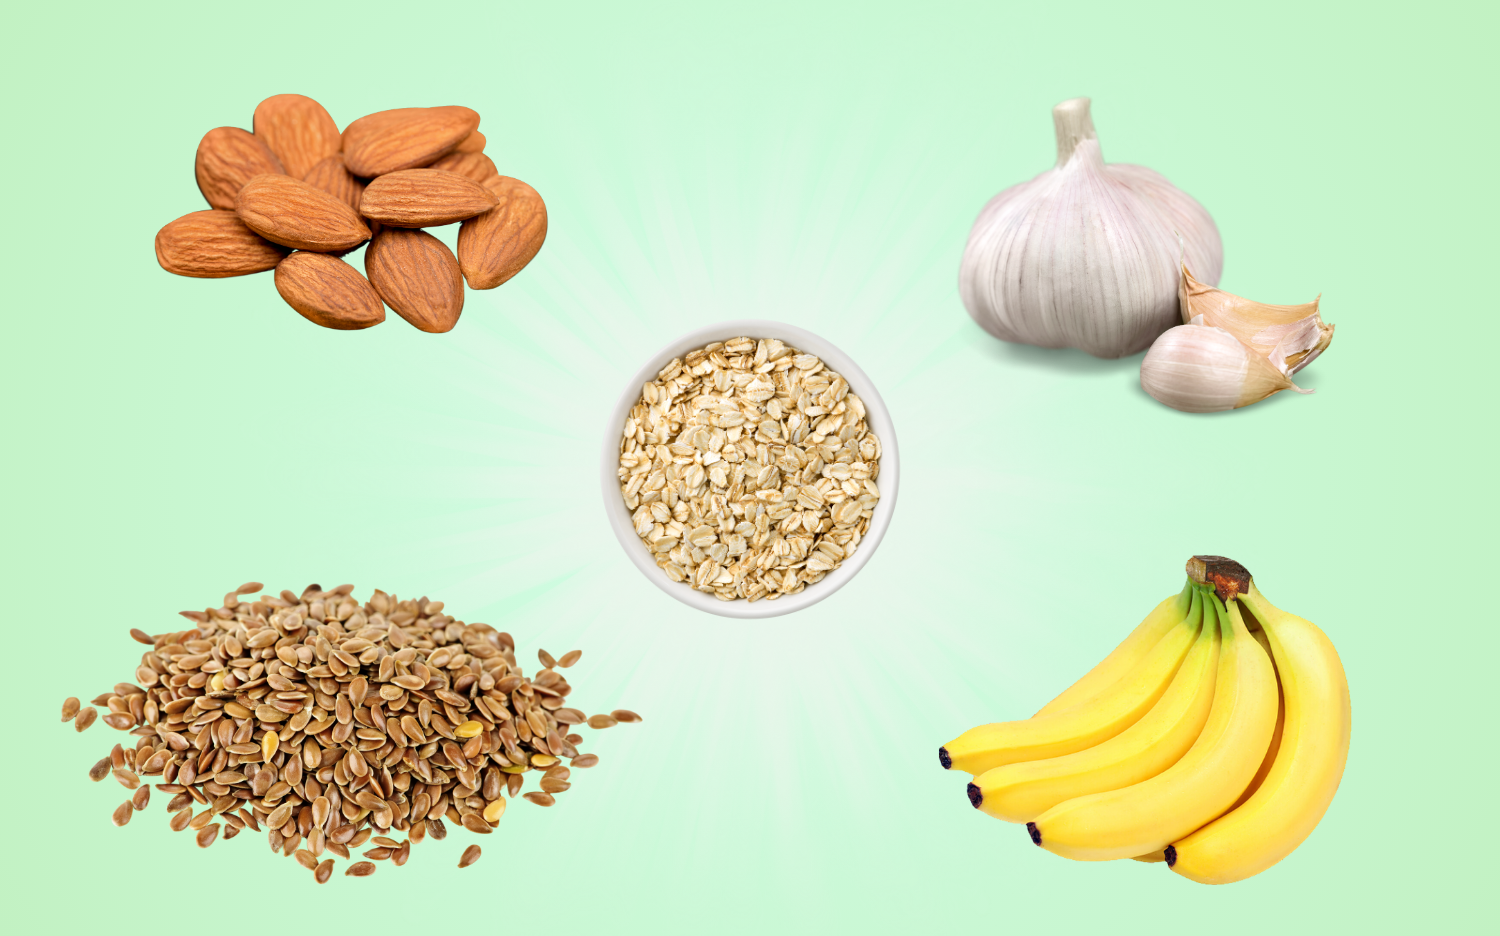 prebiotic foods almonds oats garlic bananas flax